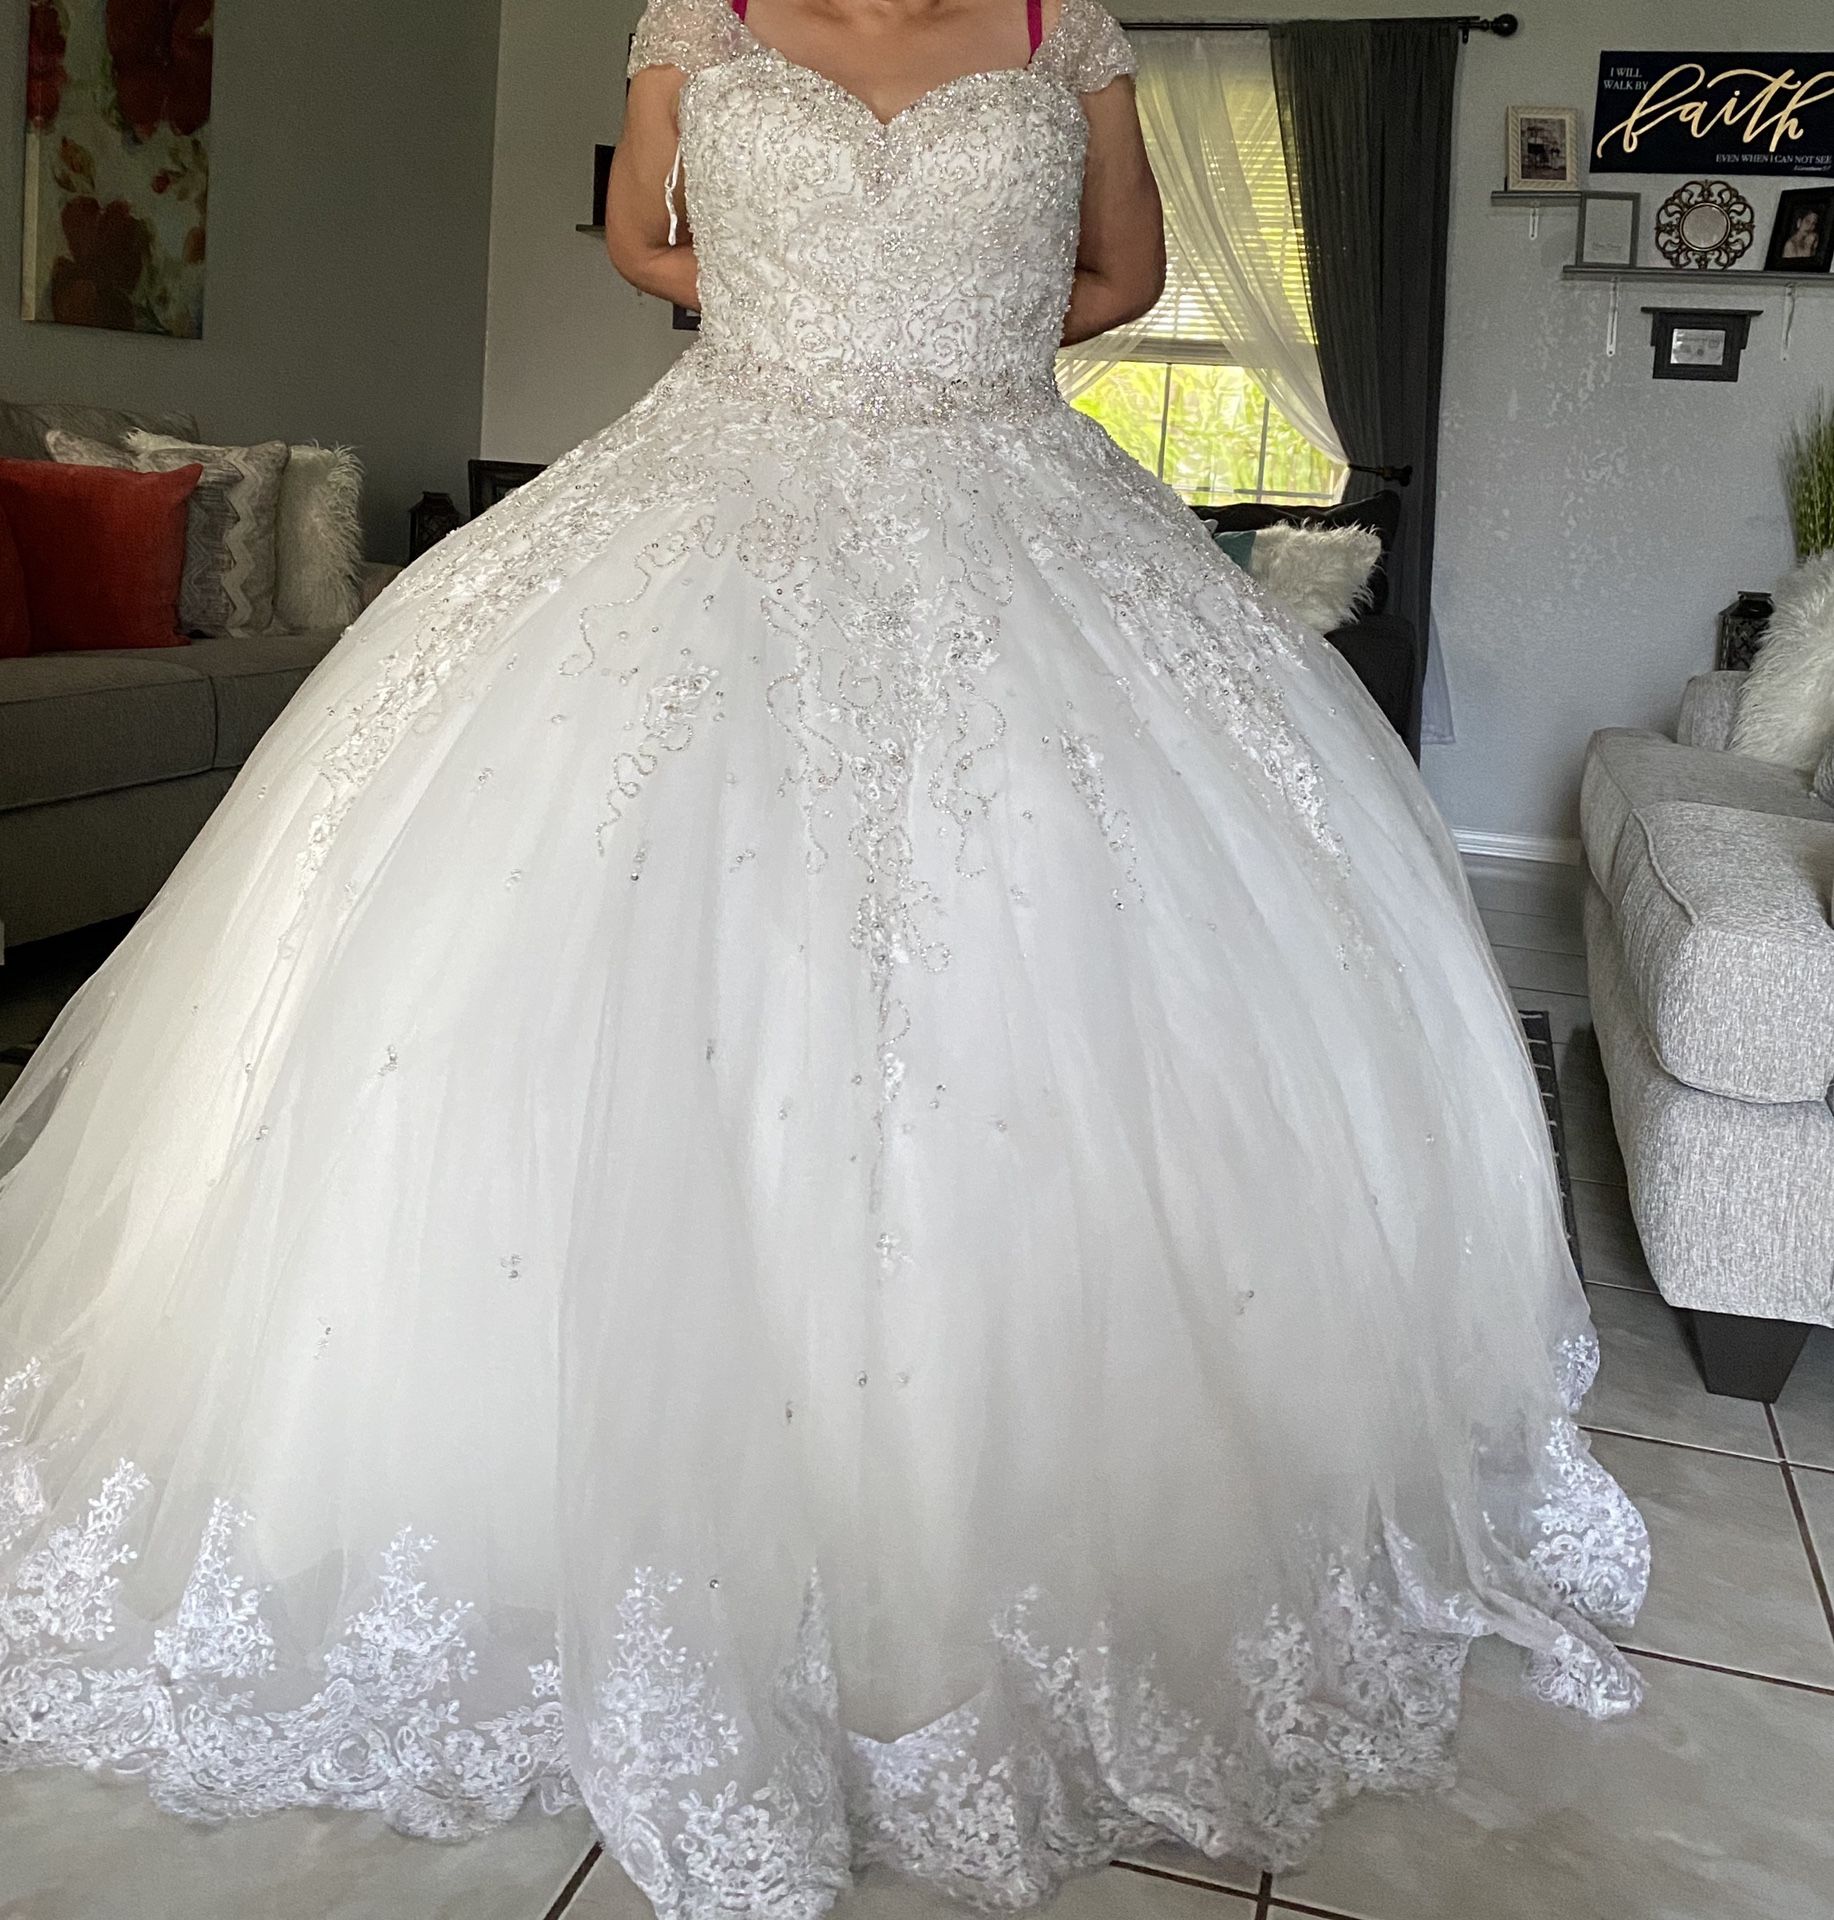 Wedding Dress, crown, and veil